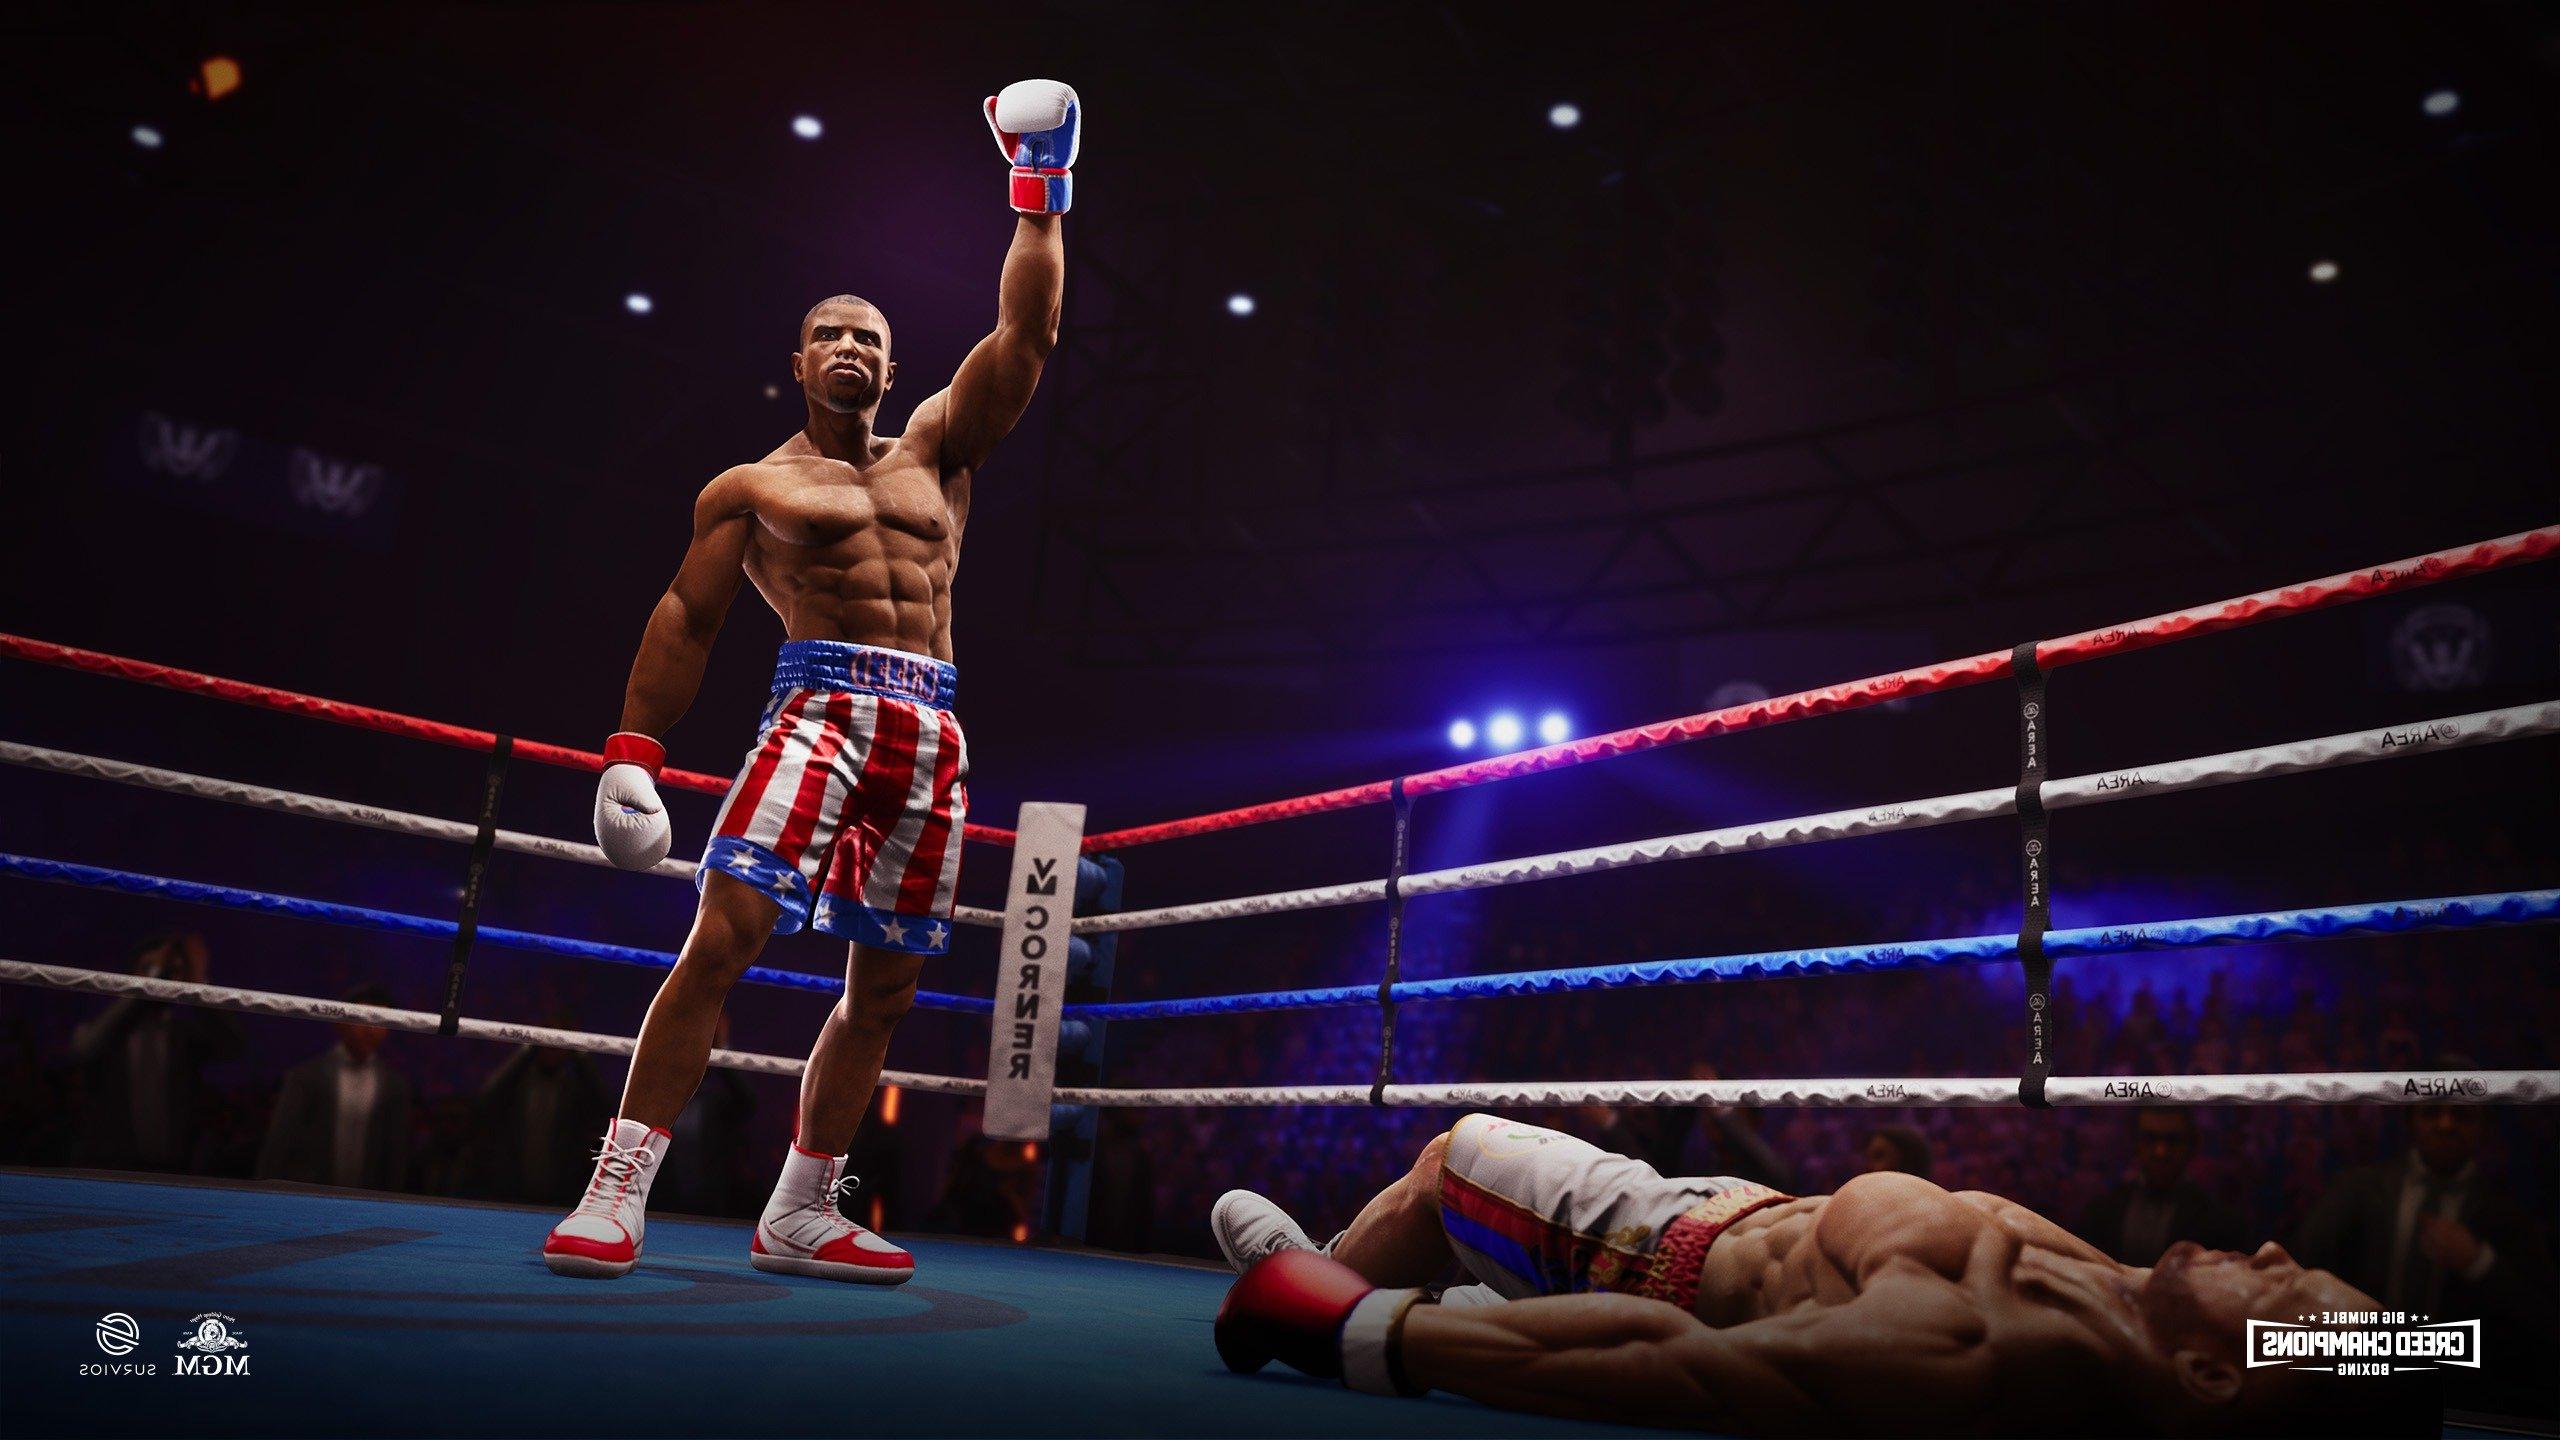 HD New Big Rumble Boxing Creed Champions 2021 Wallpapers